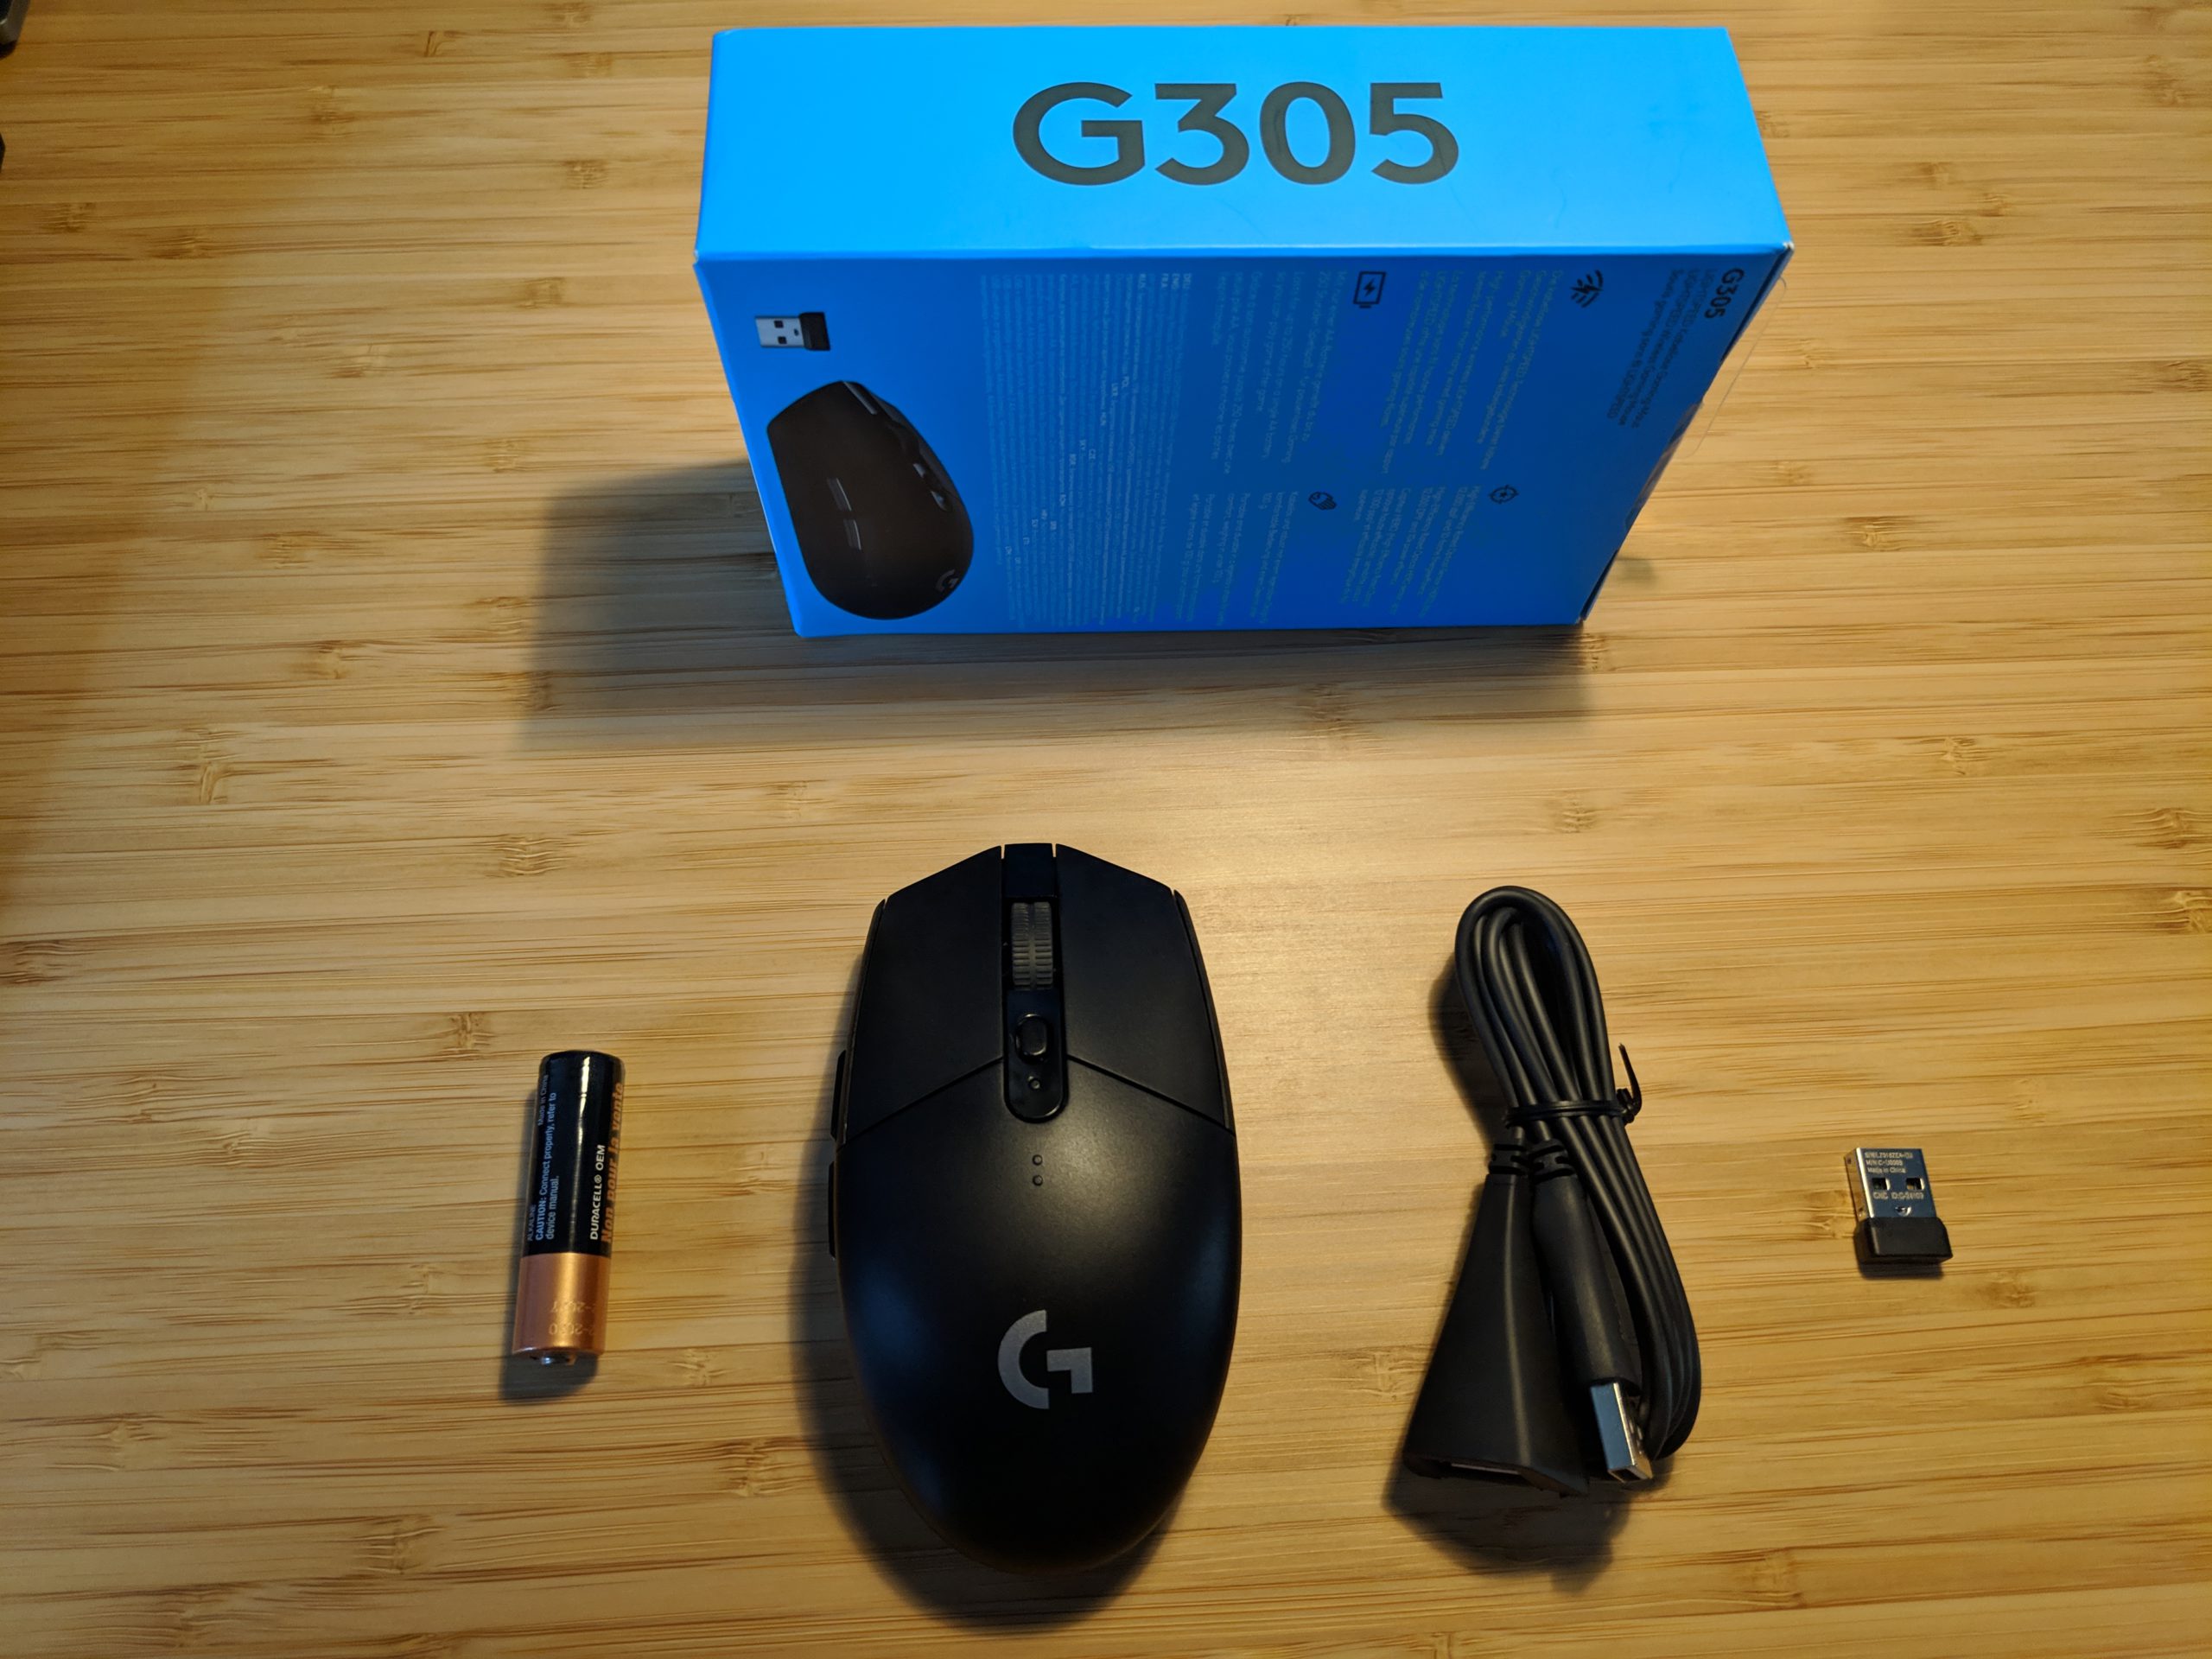 hovedpine Fem pige Logitech G305 Gaming Mouse Review - Abhishek Nagekar's Blog